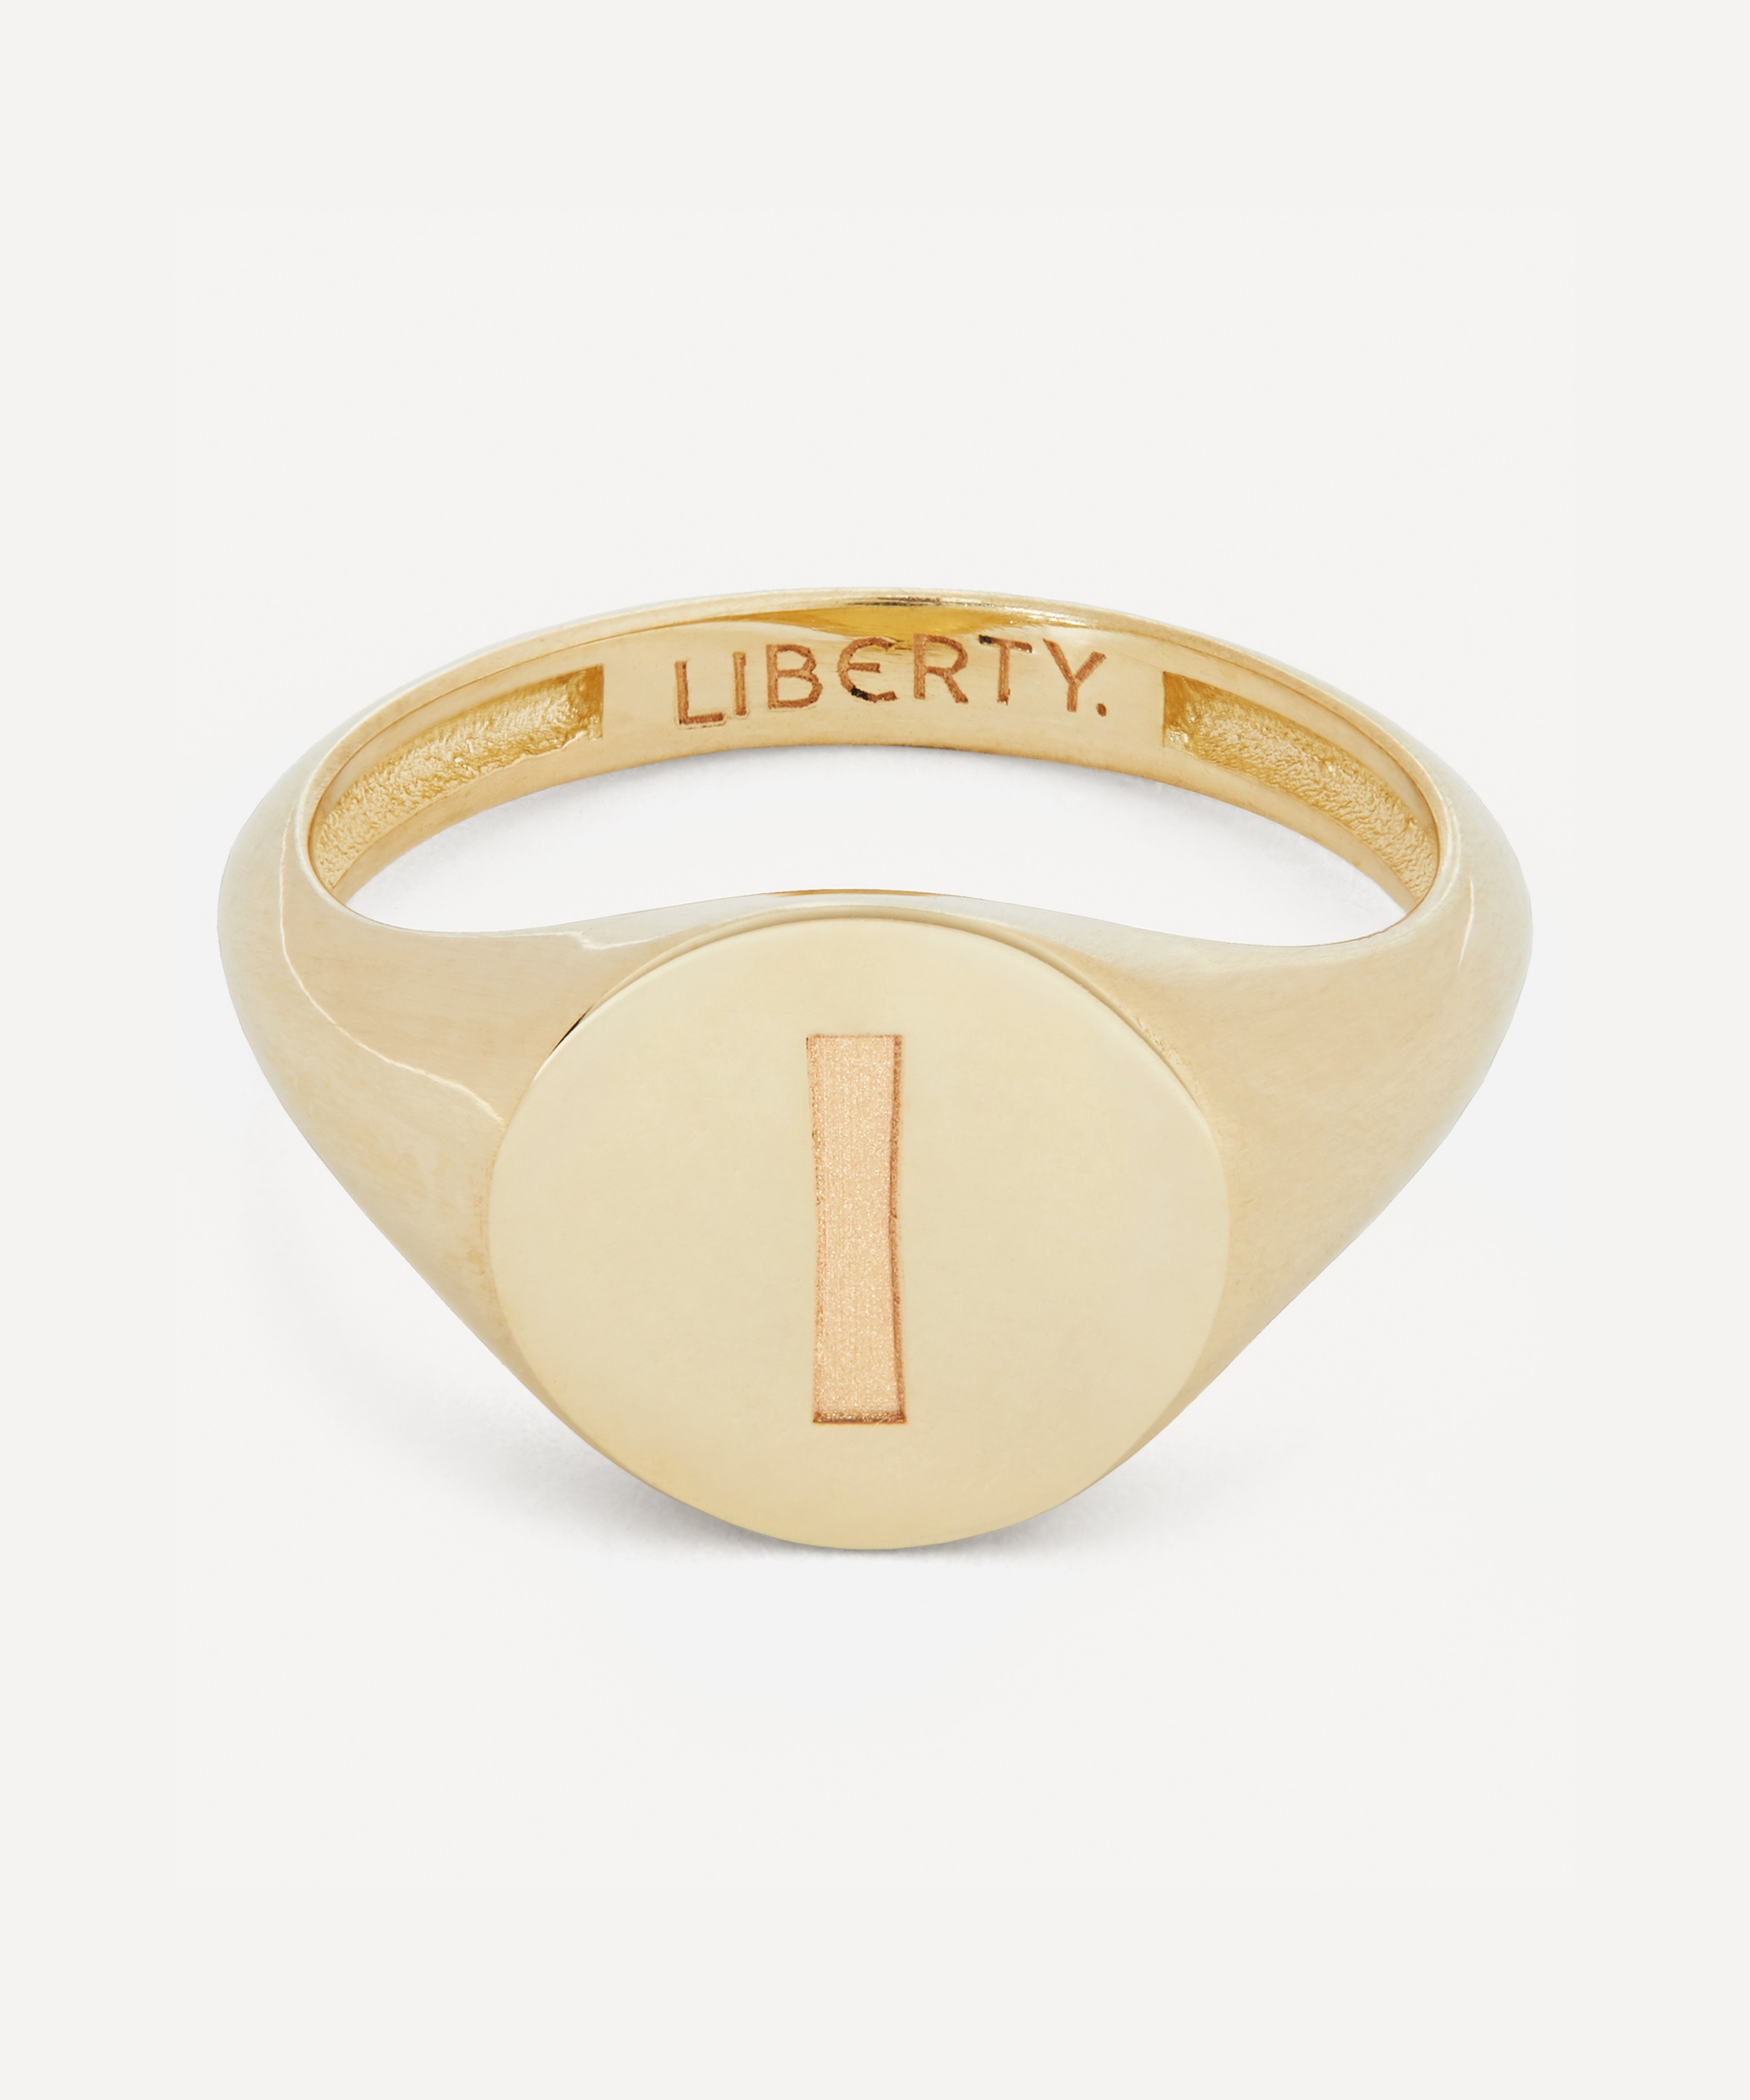 Liberty - 9ct Gold Initial Liberty Signet Ring - I